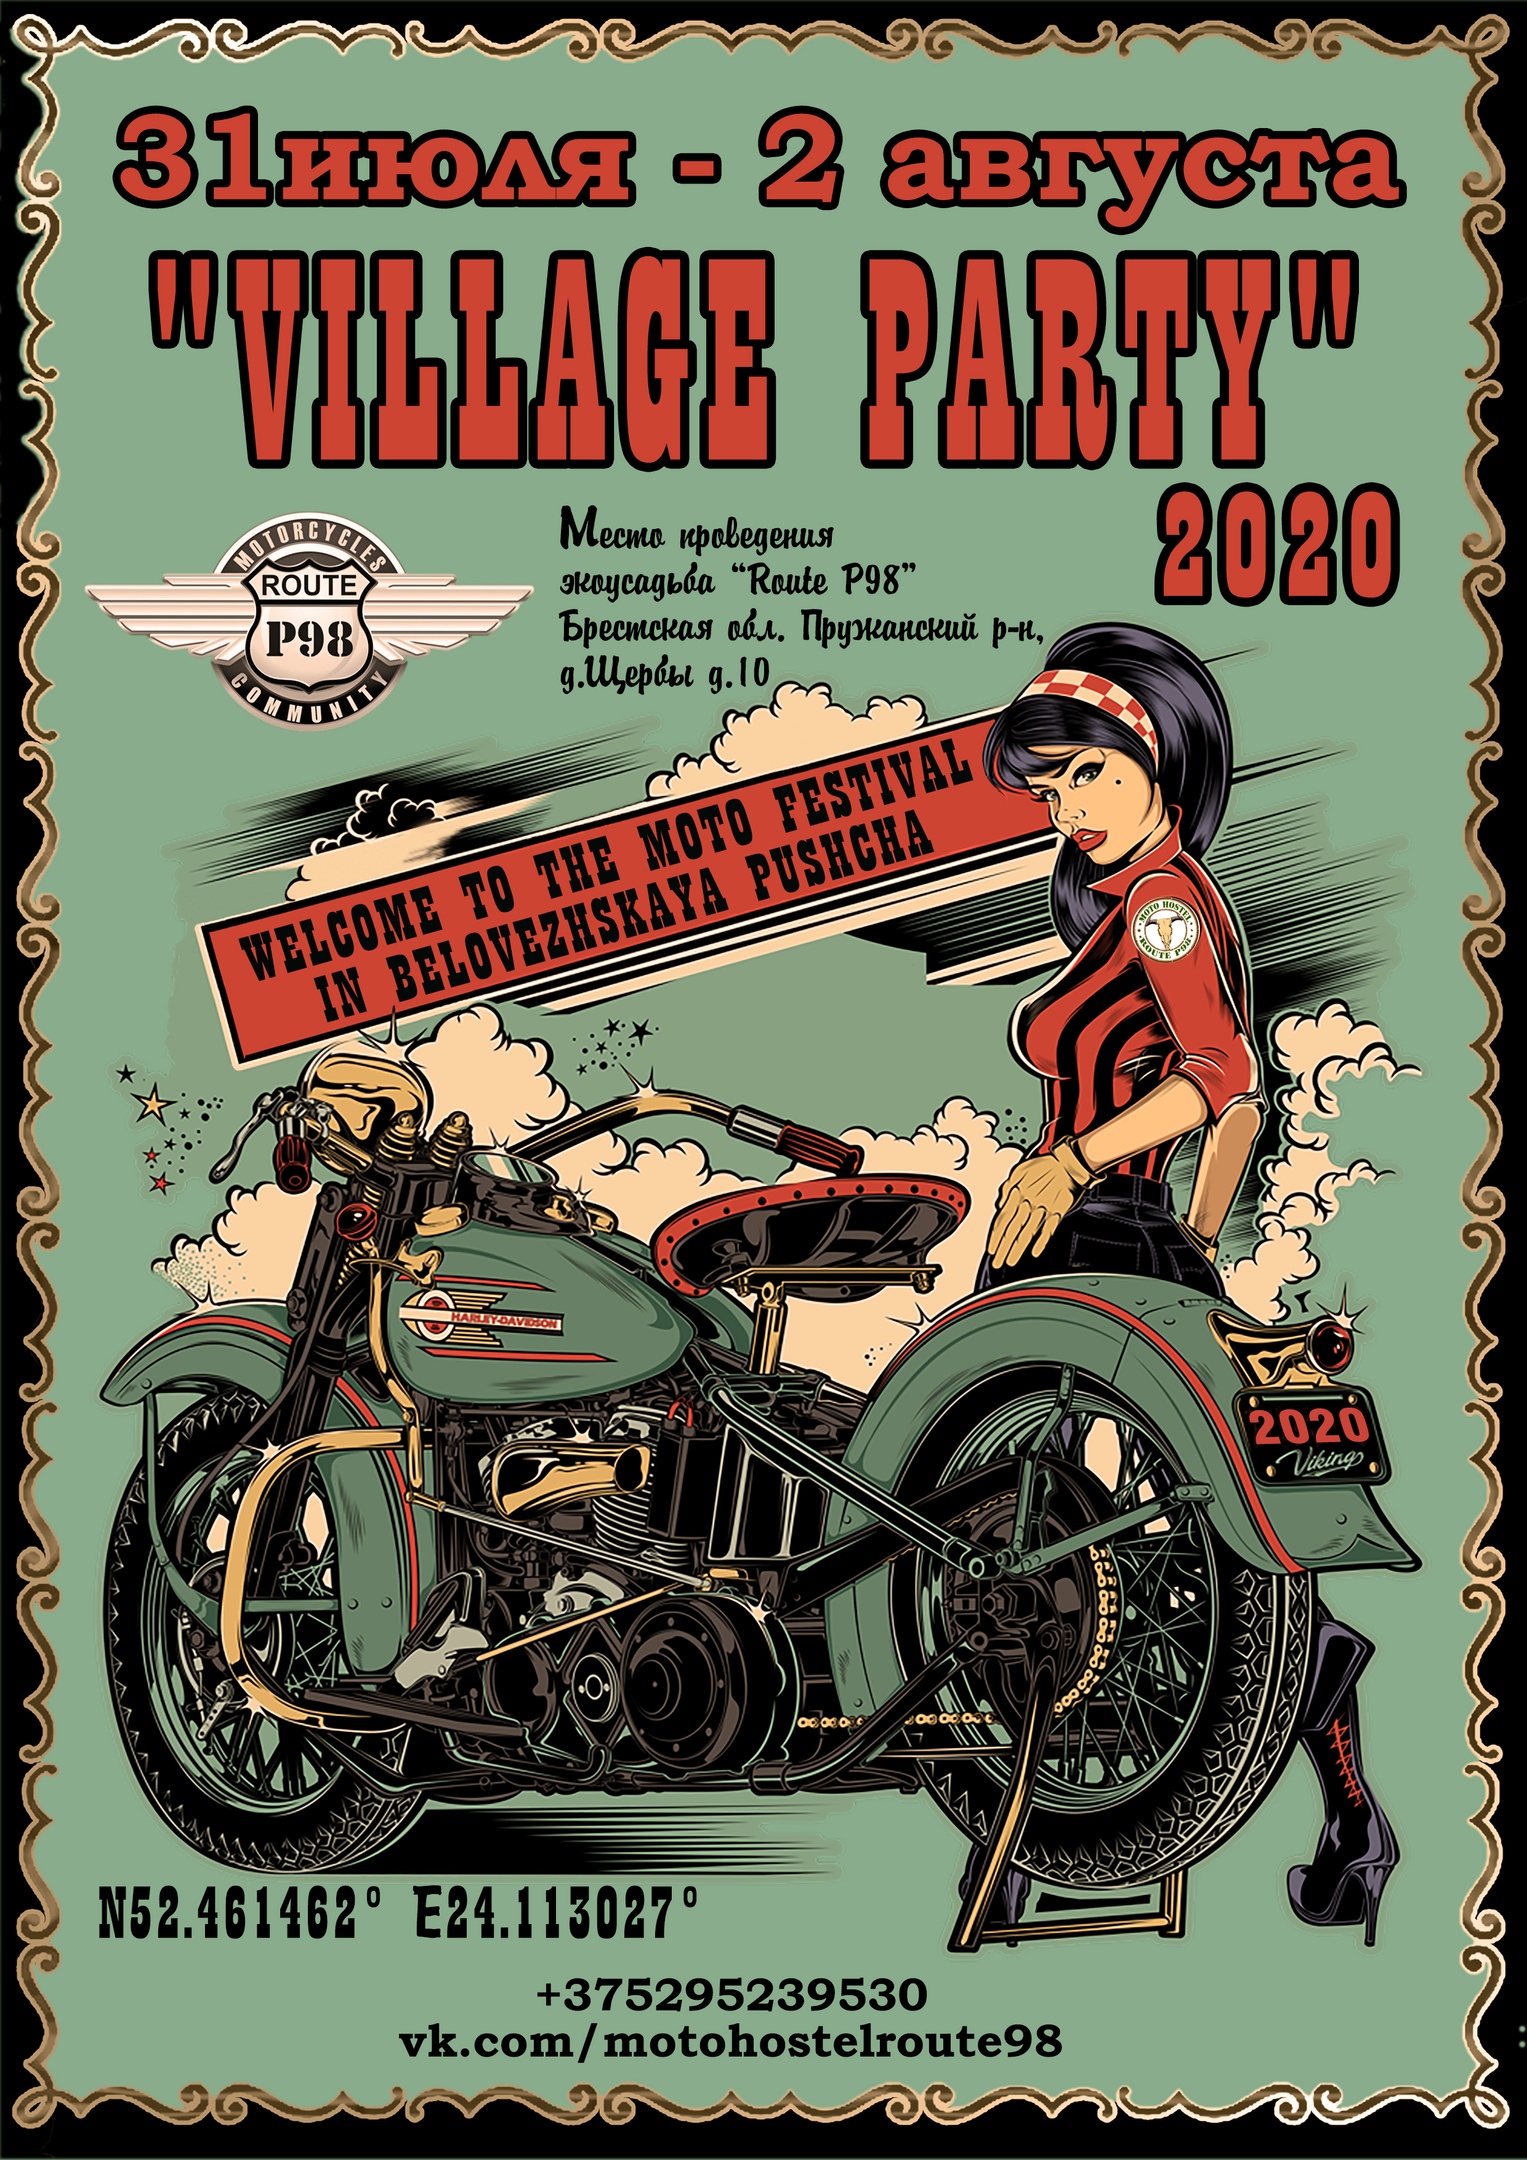 Village party 2020